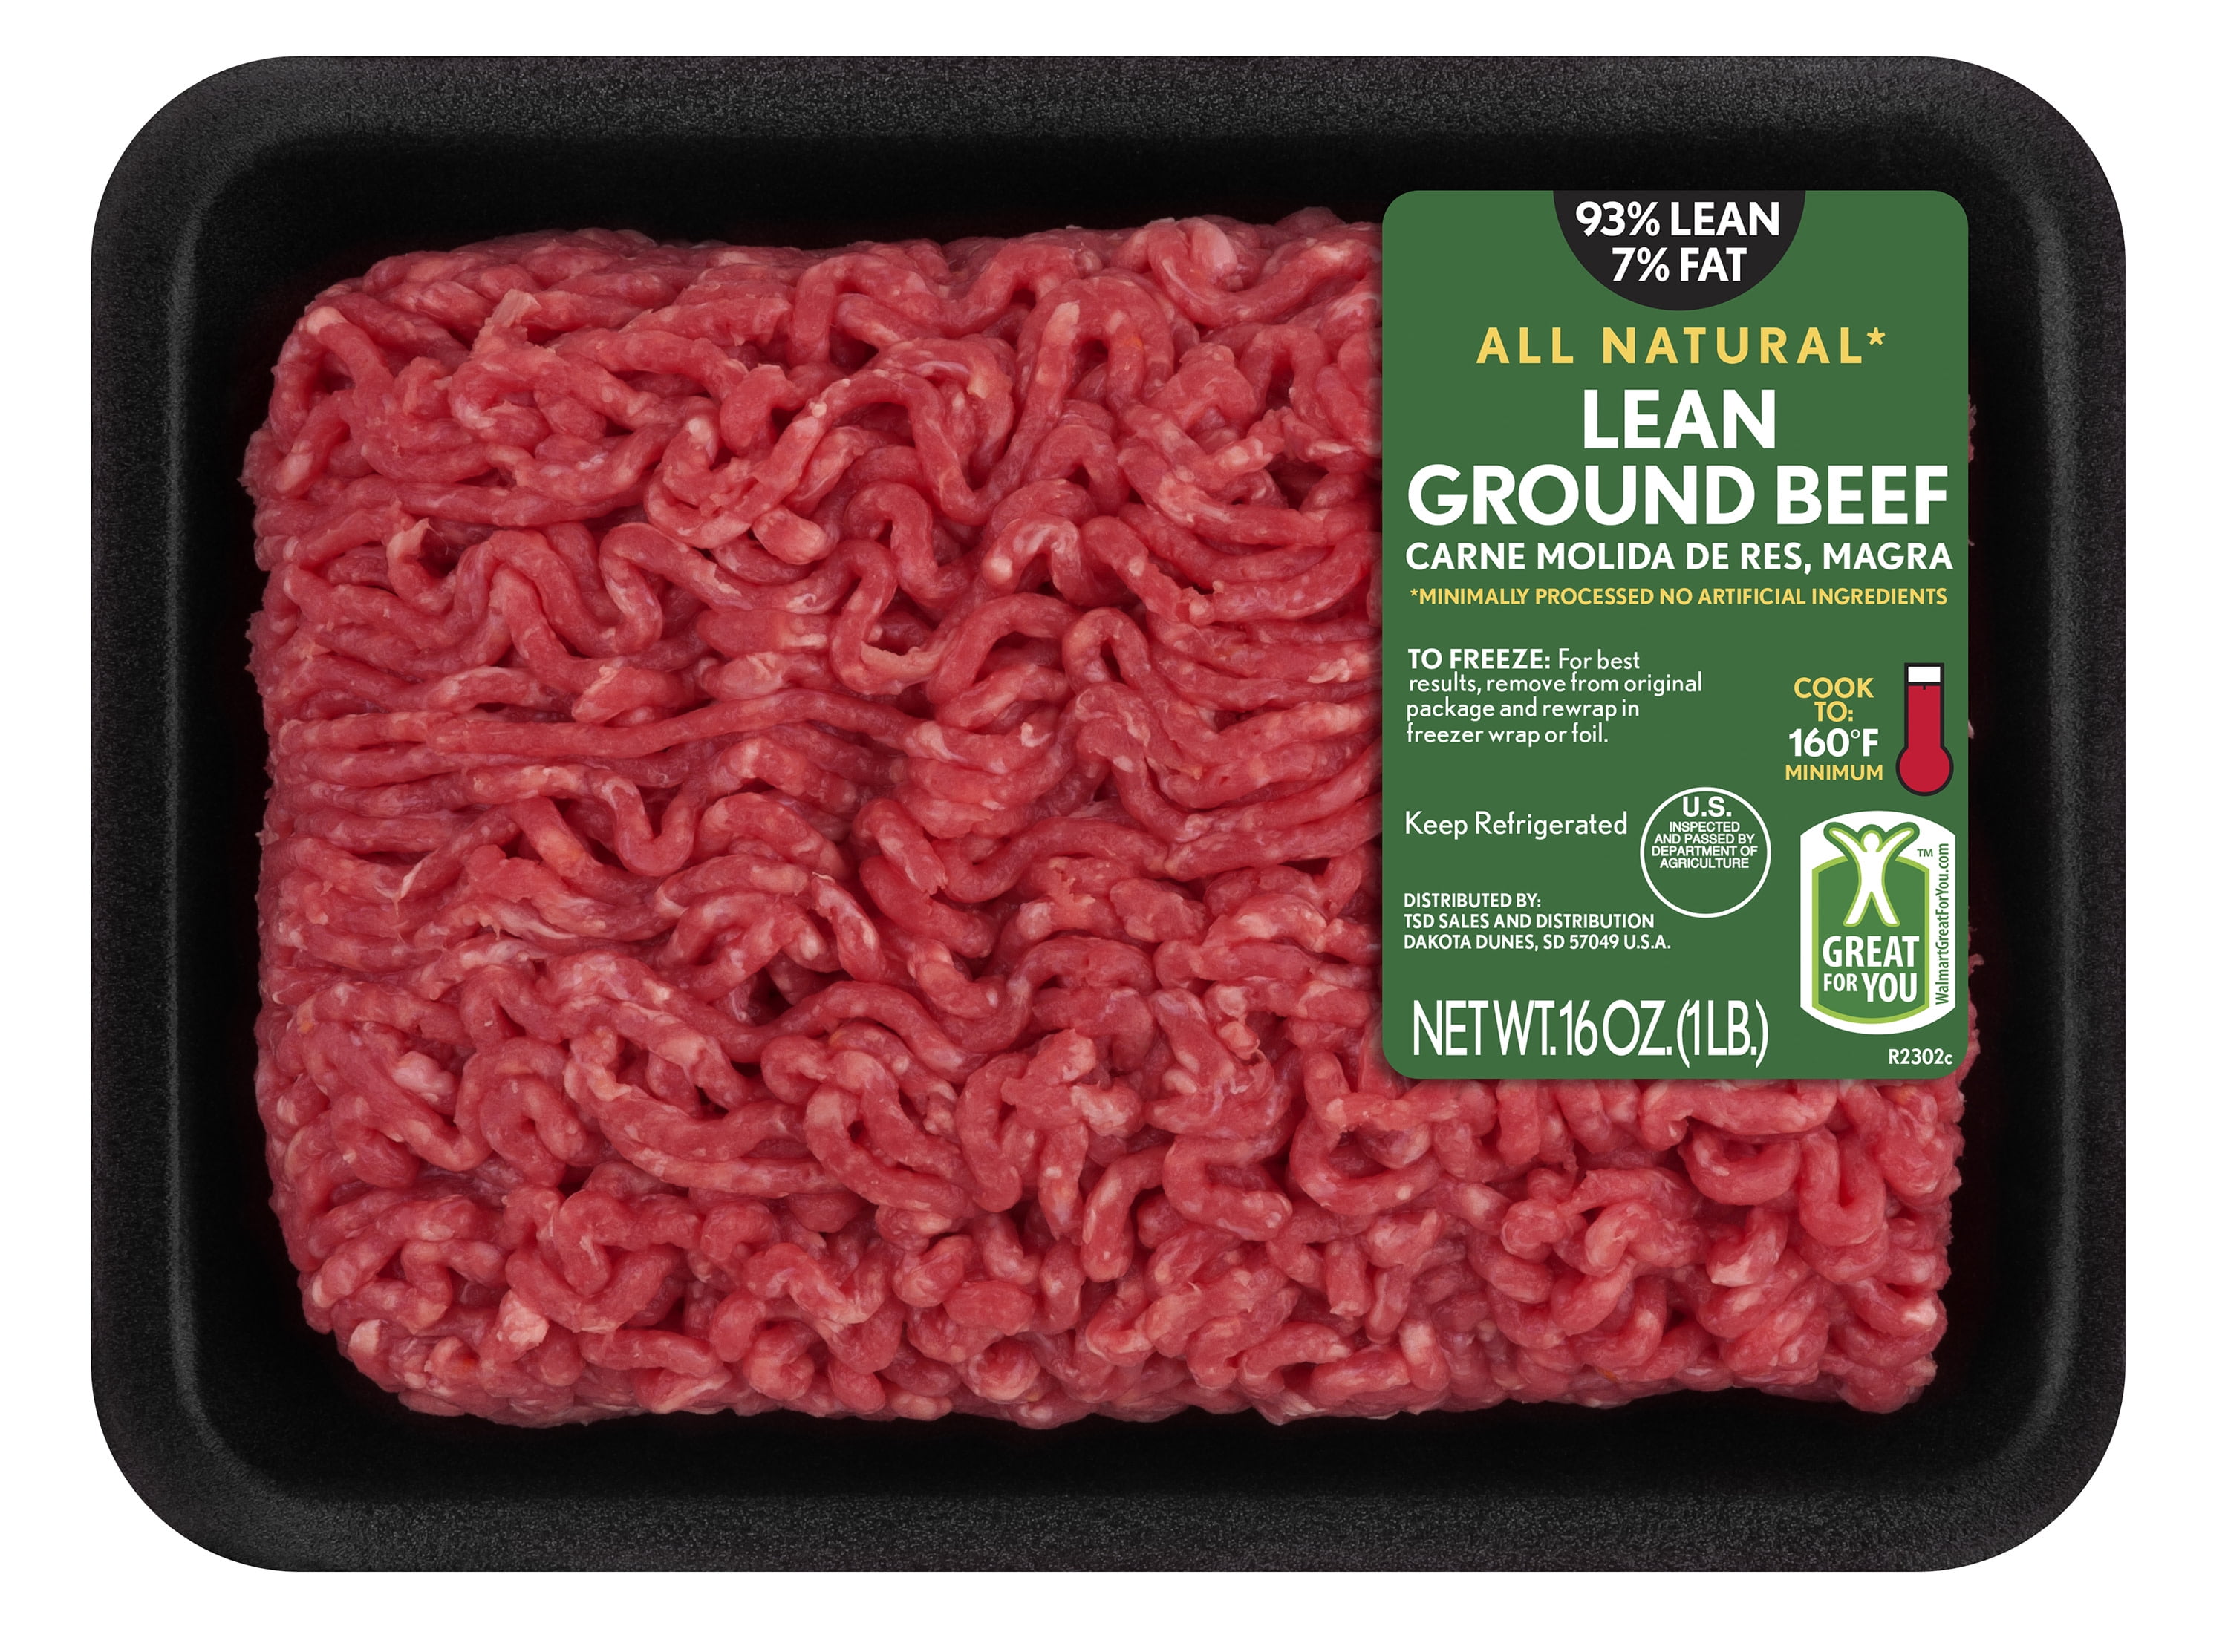 Ground Beef